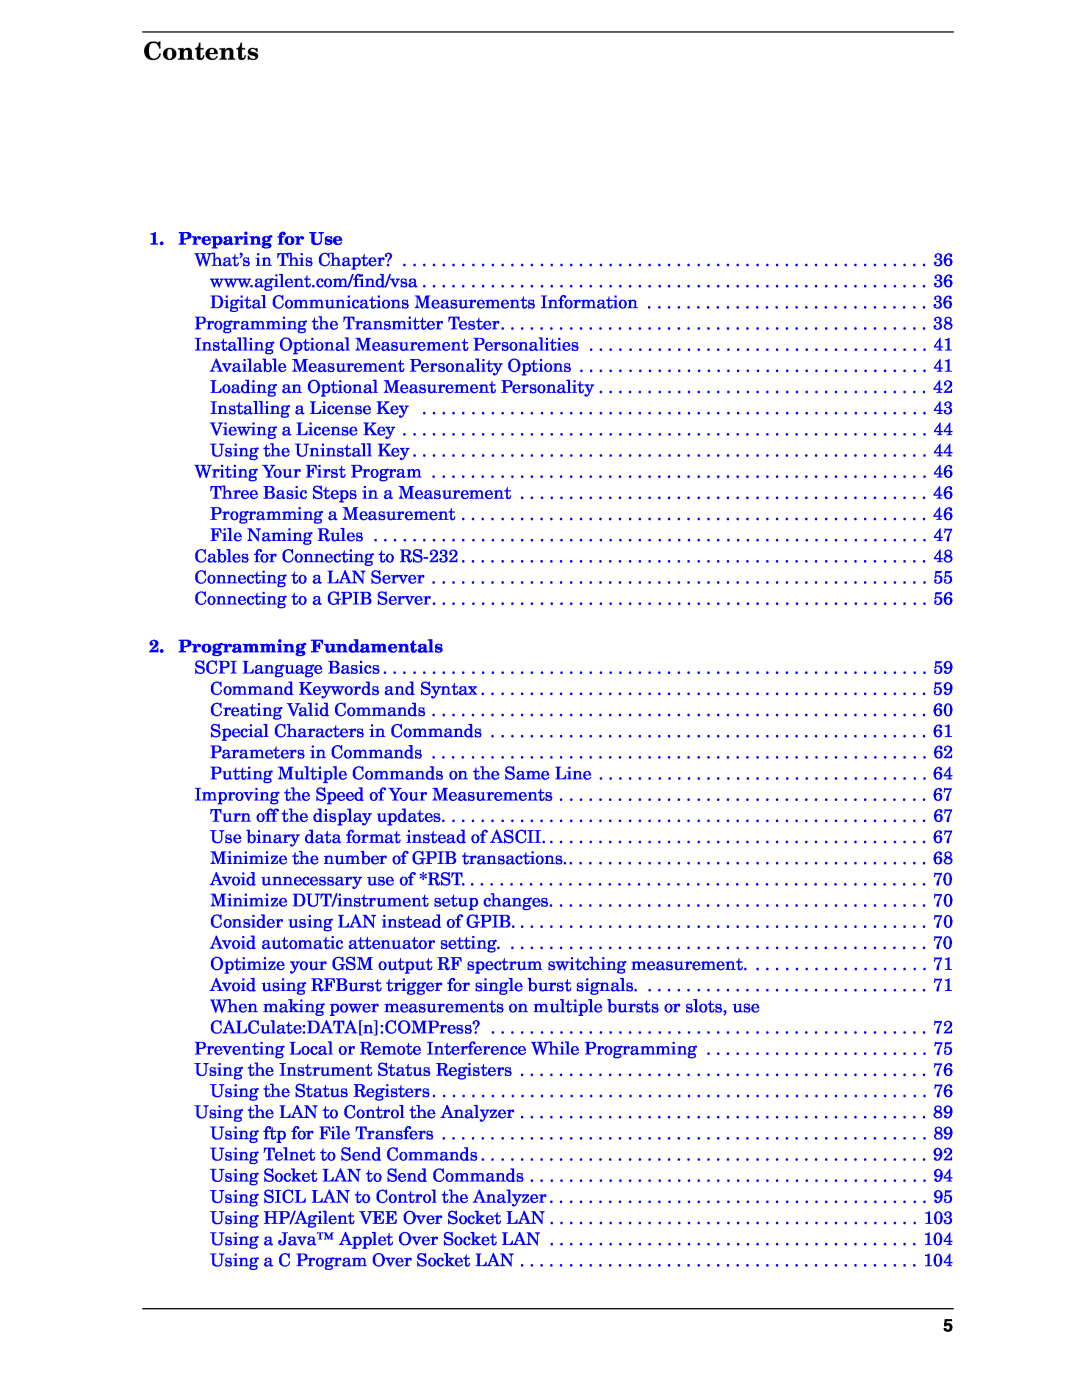 Agilent Technologies E4406A VSA manual Contents, Preparing for Use, Programming Fundamentals 